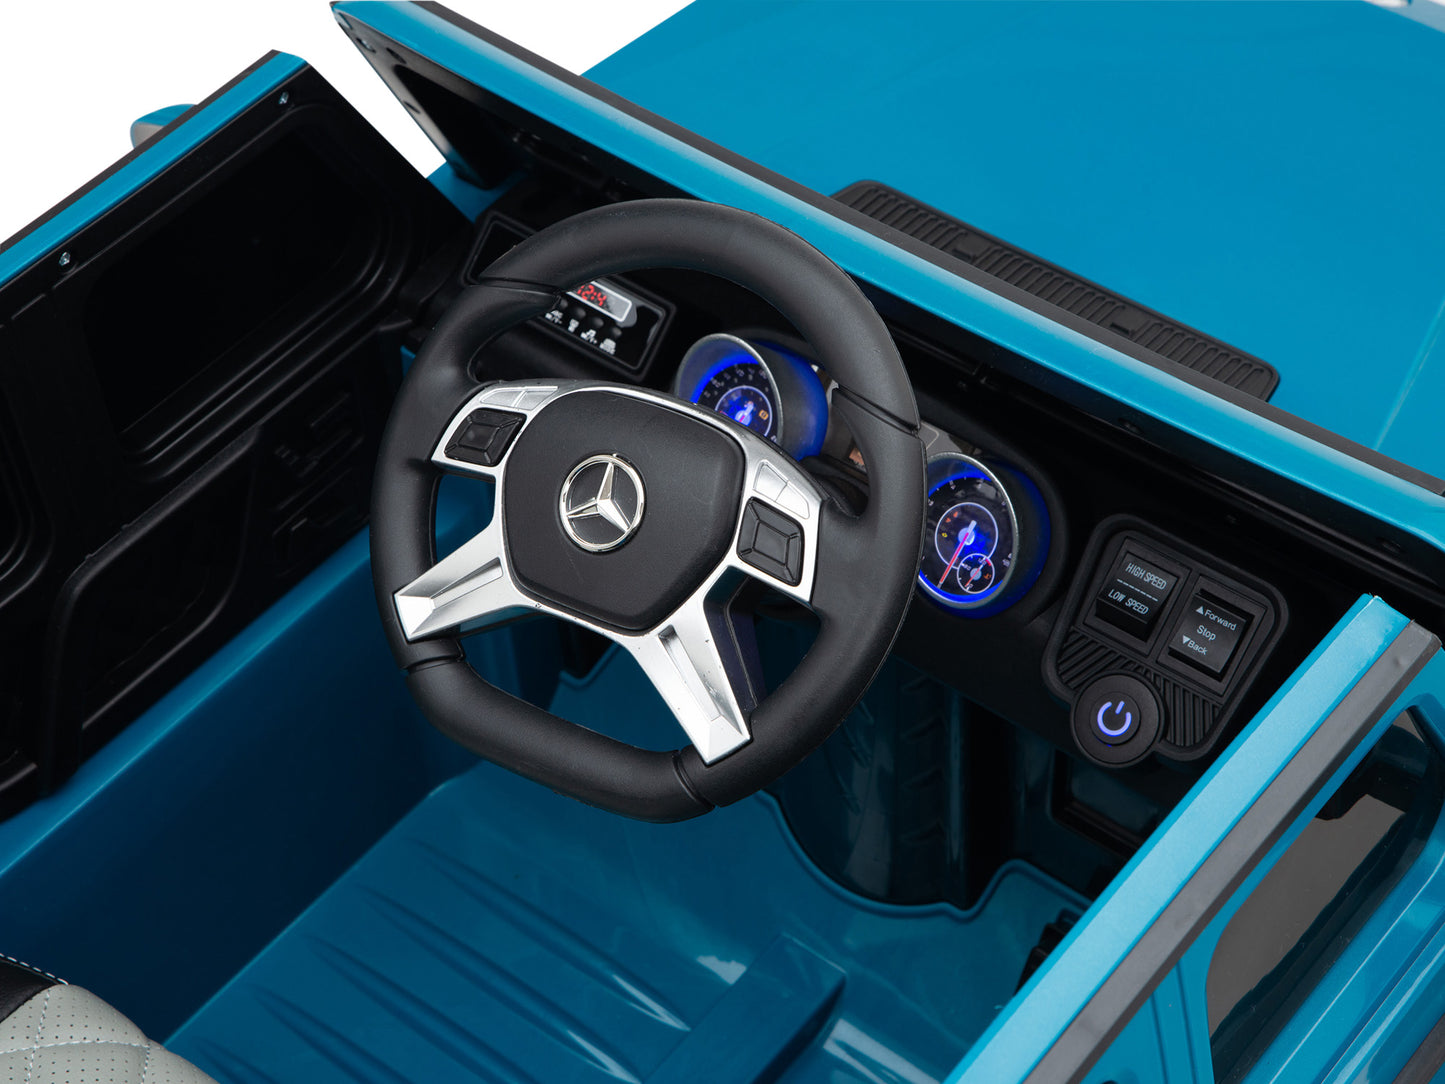 12V Mercedes-Maybach G650 Landaulet Kids Ride On Car/SUV with Remote - Blue